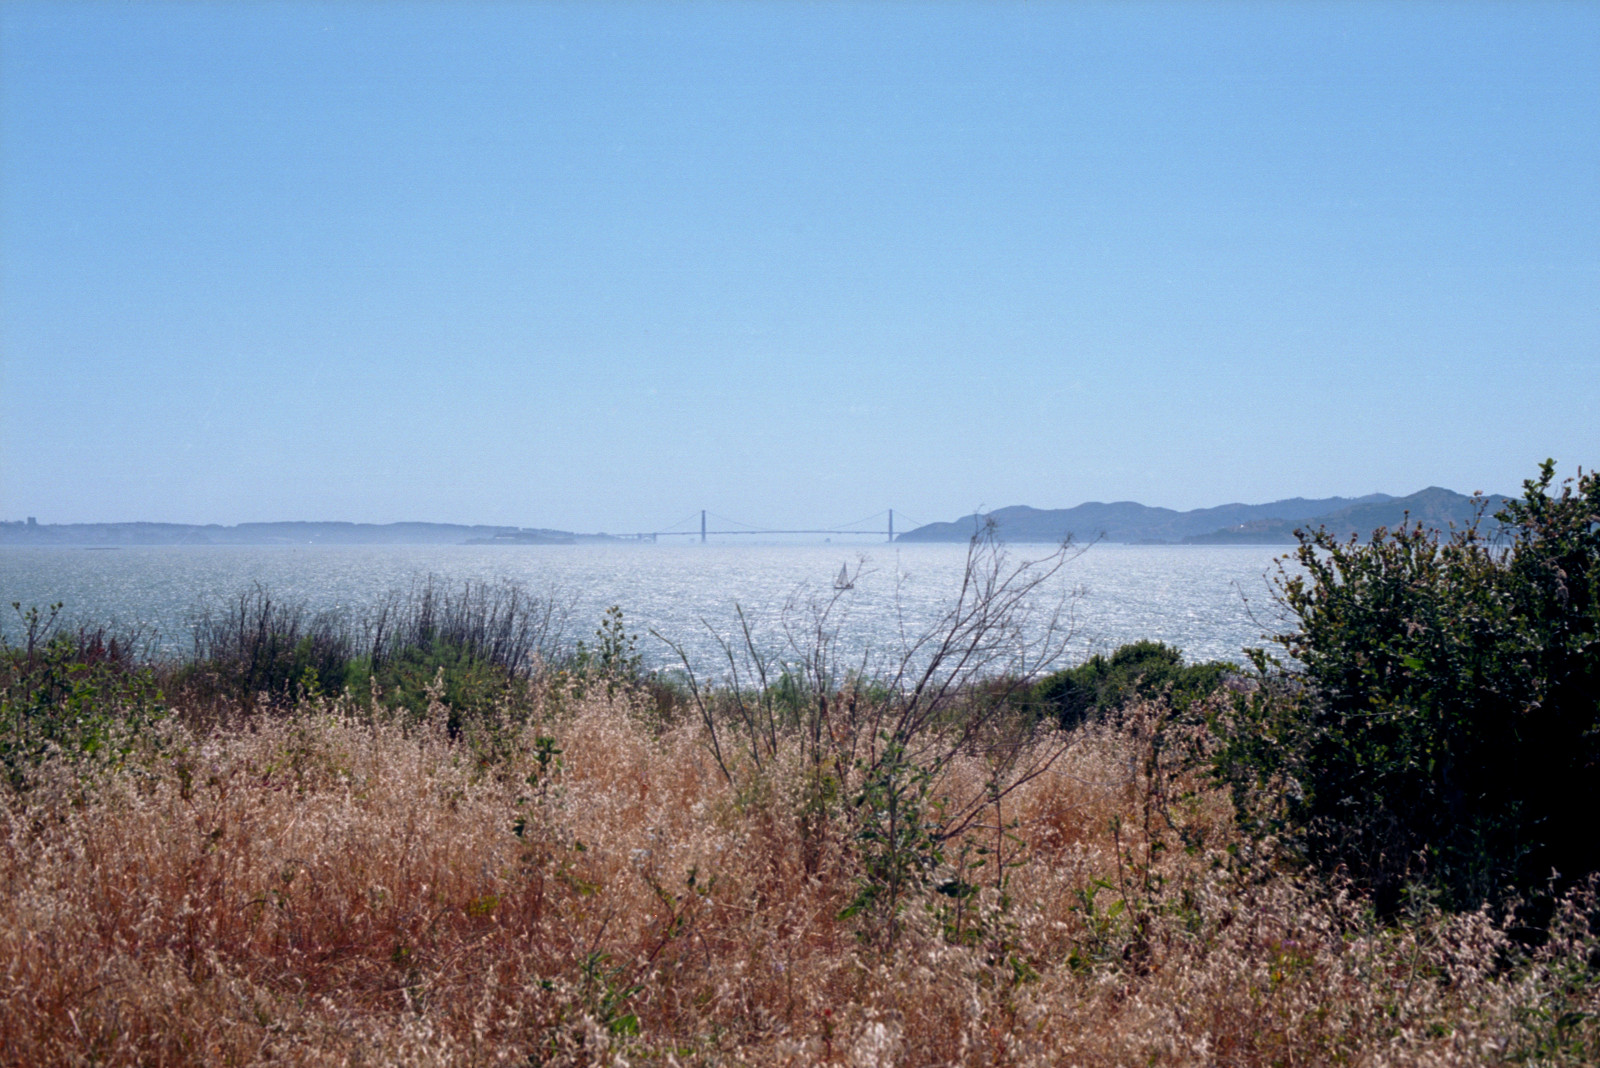 View from the Berkeley Marina toward the Golden Gate